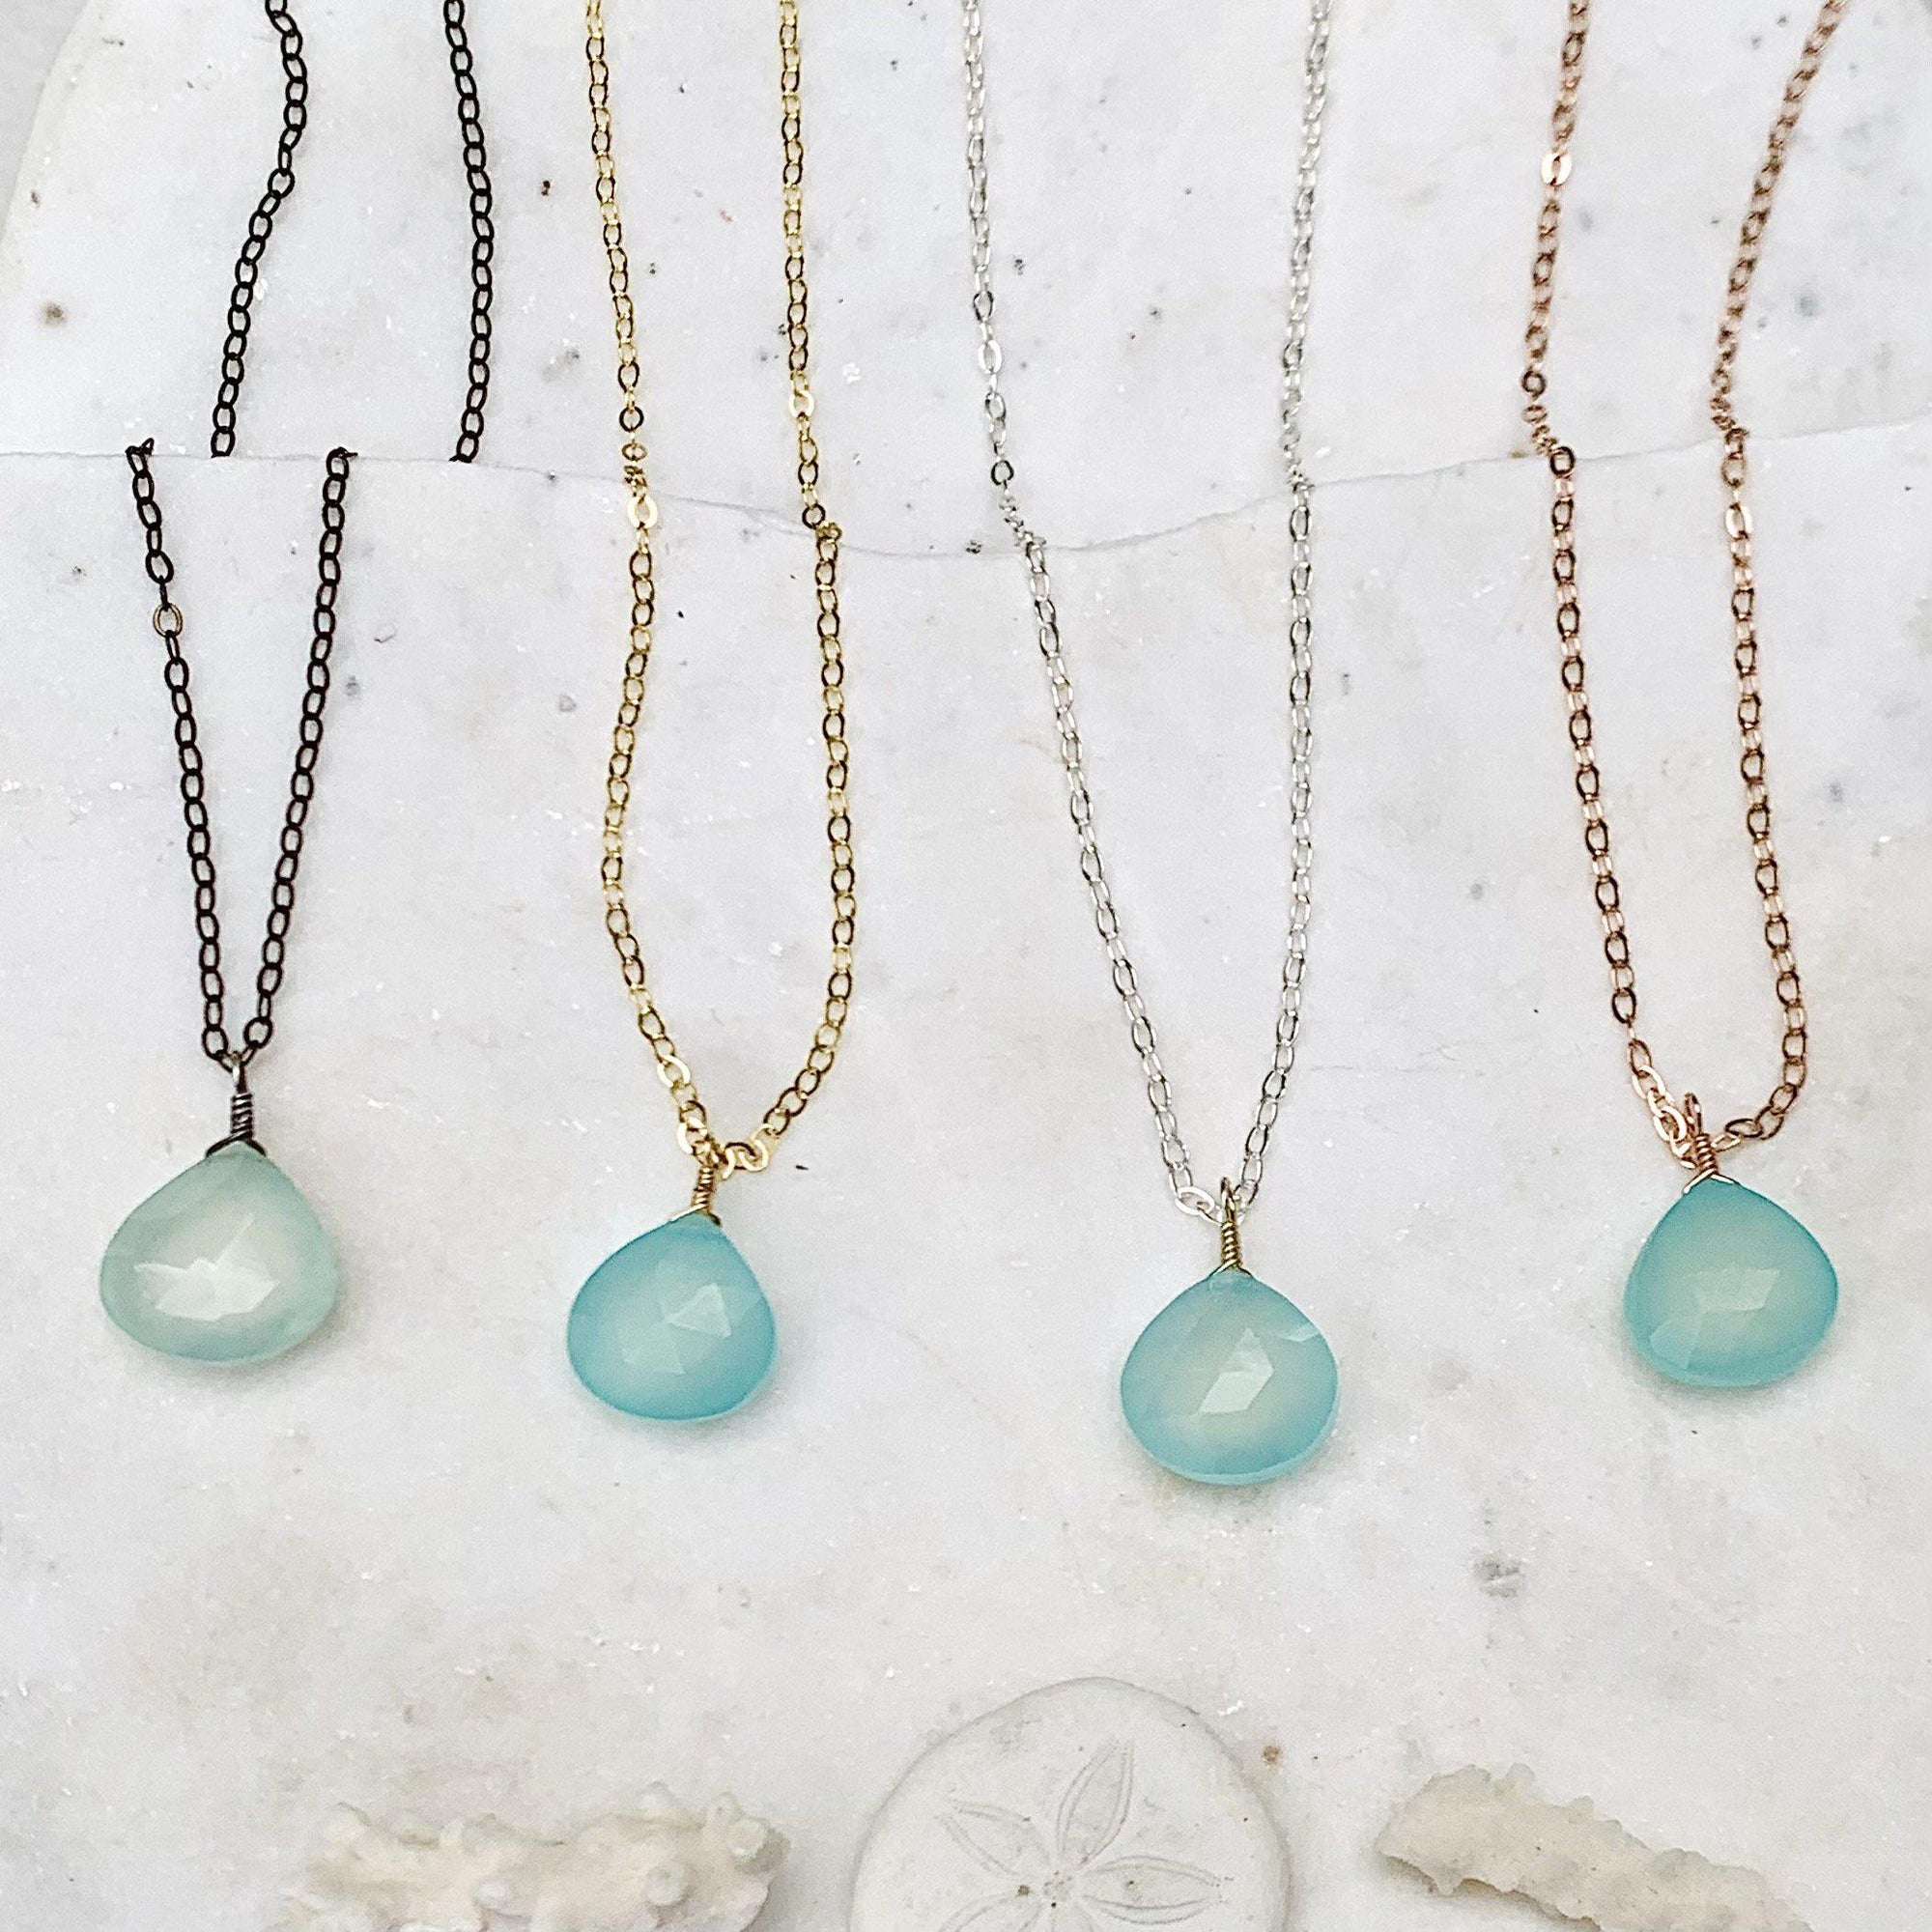 Sayuri Necklace - aqua blue chalcedony gemstone solitaire necklace - Foamy Wader